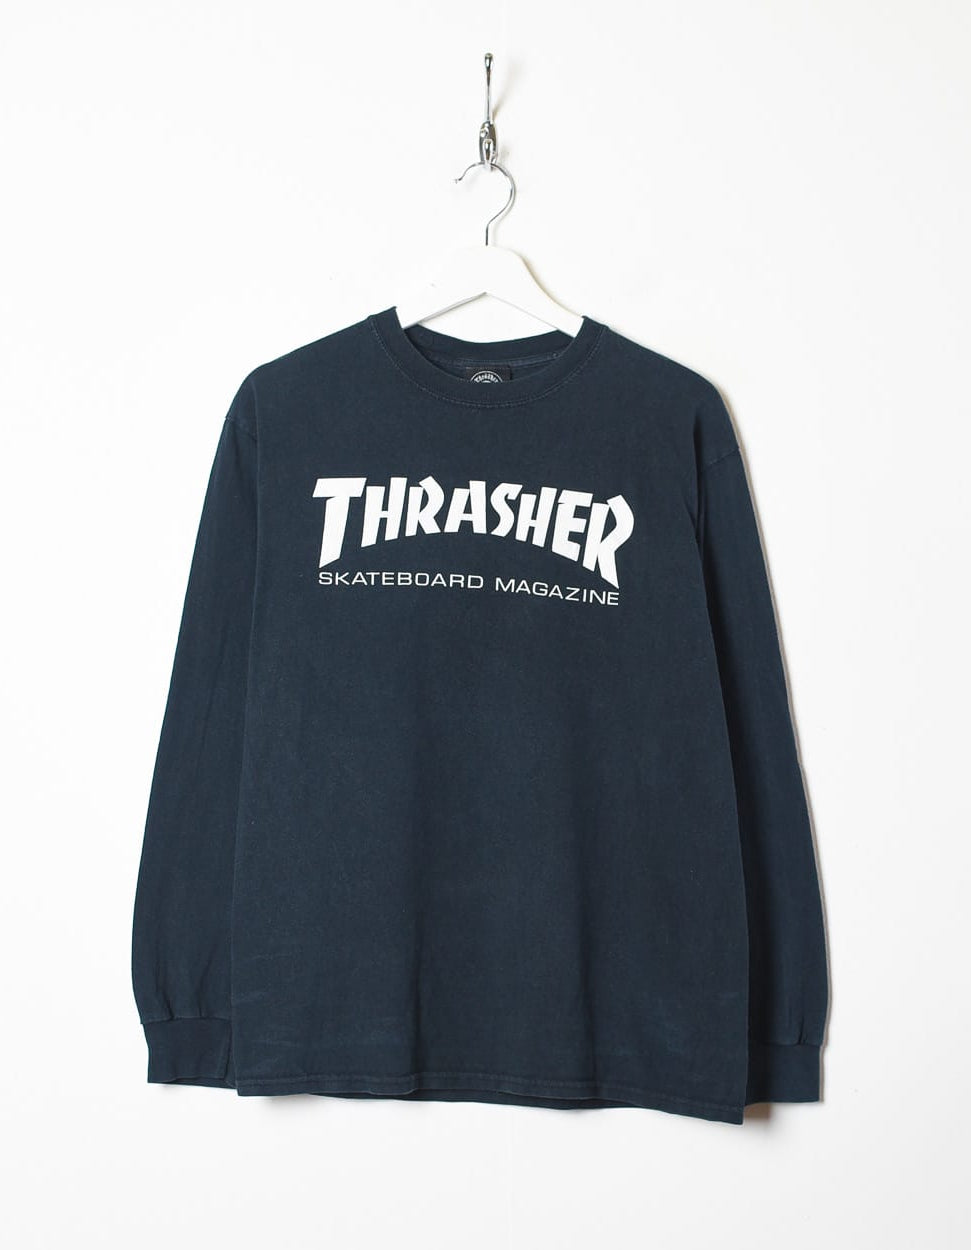 Black Thrasher Long Sleeved T-Shirt - Small